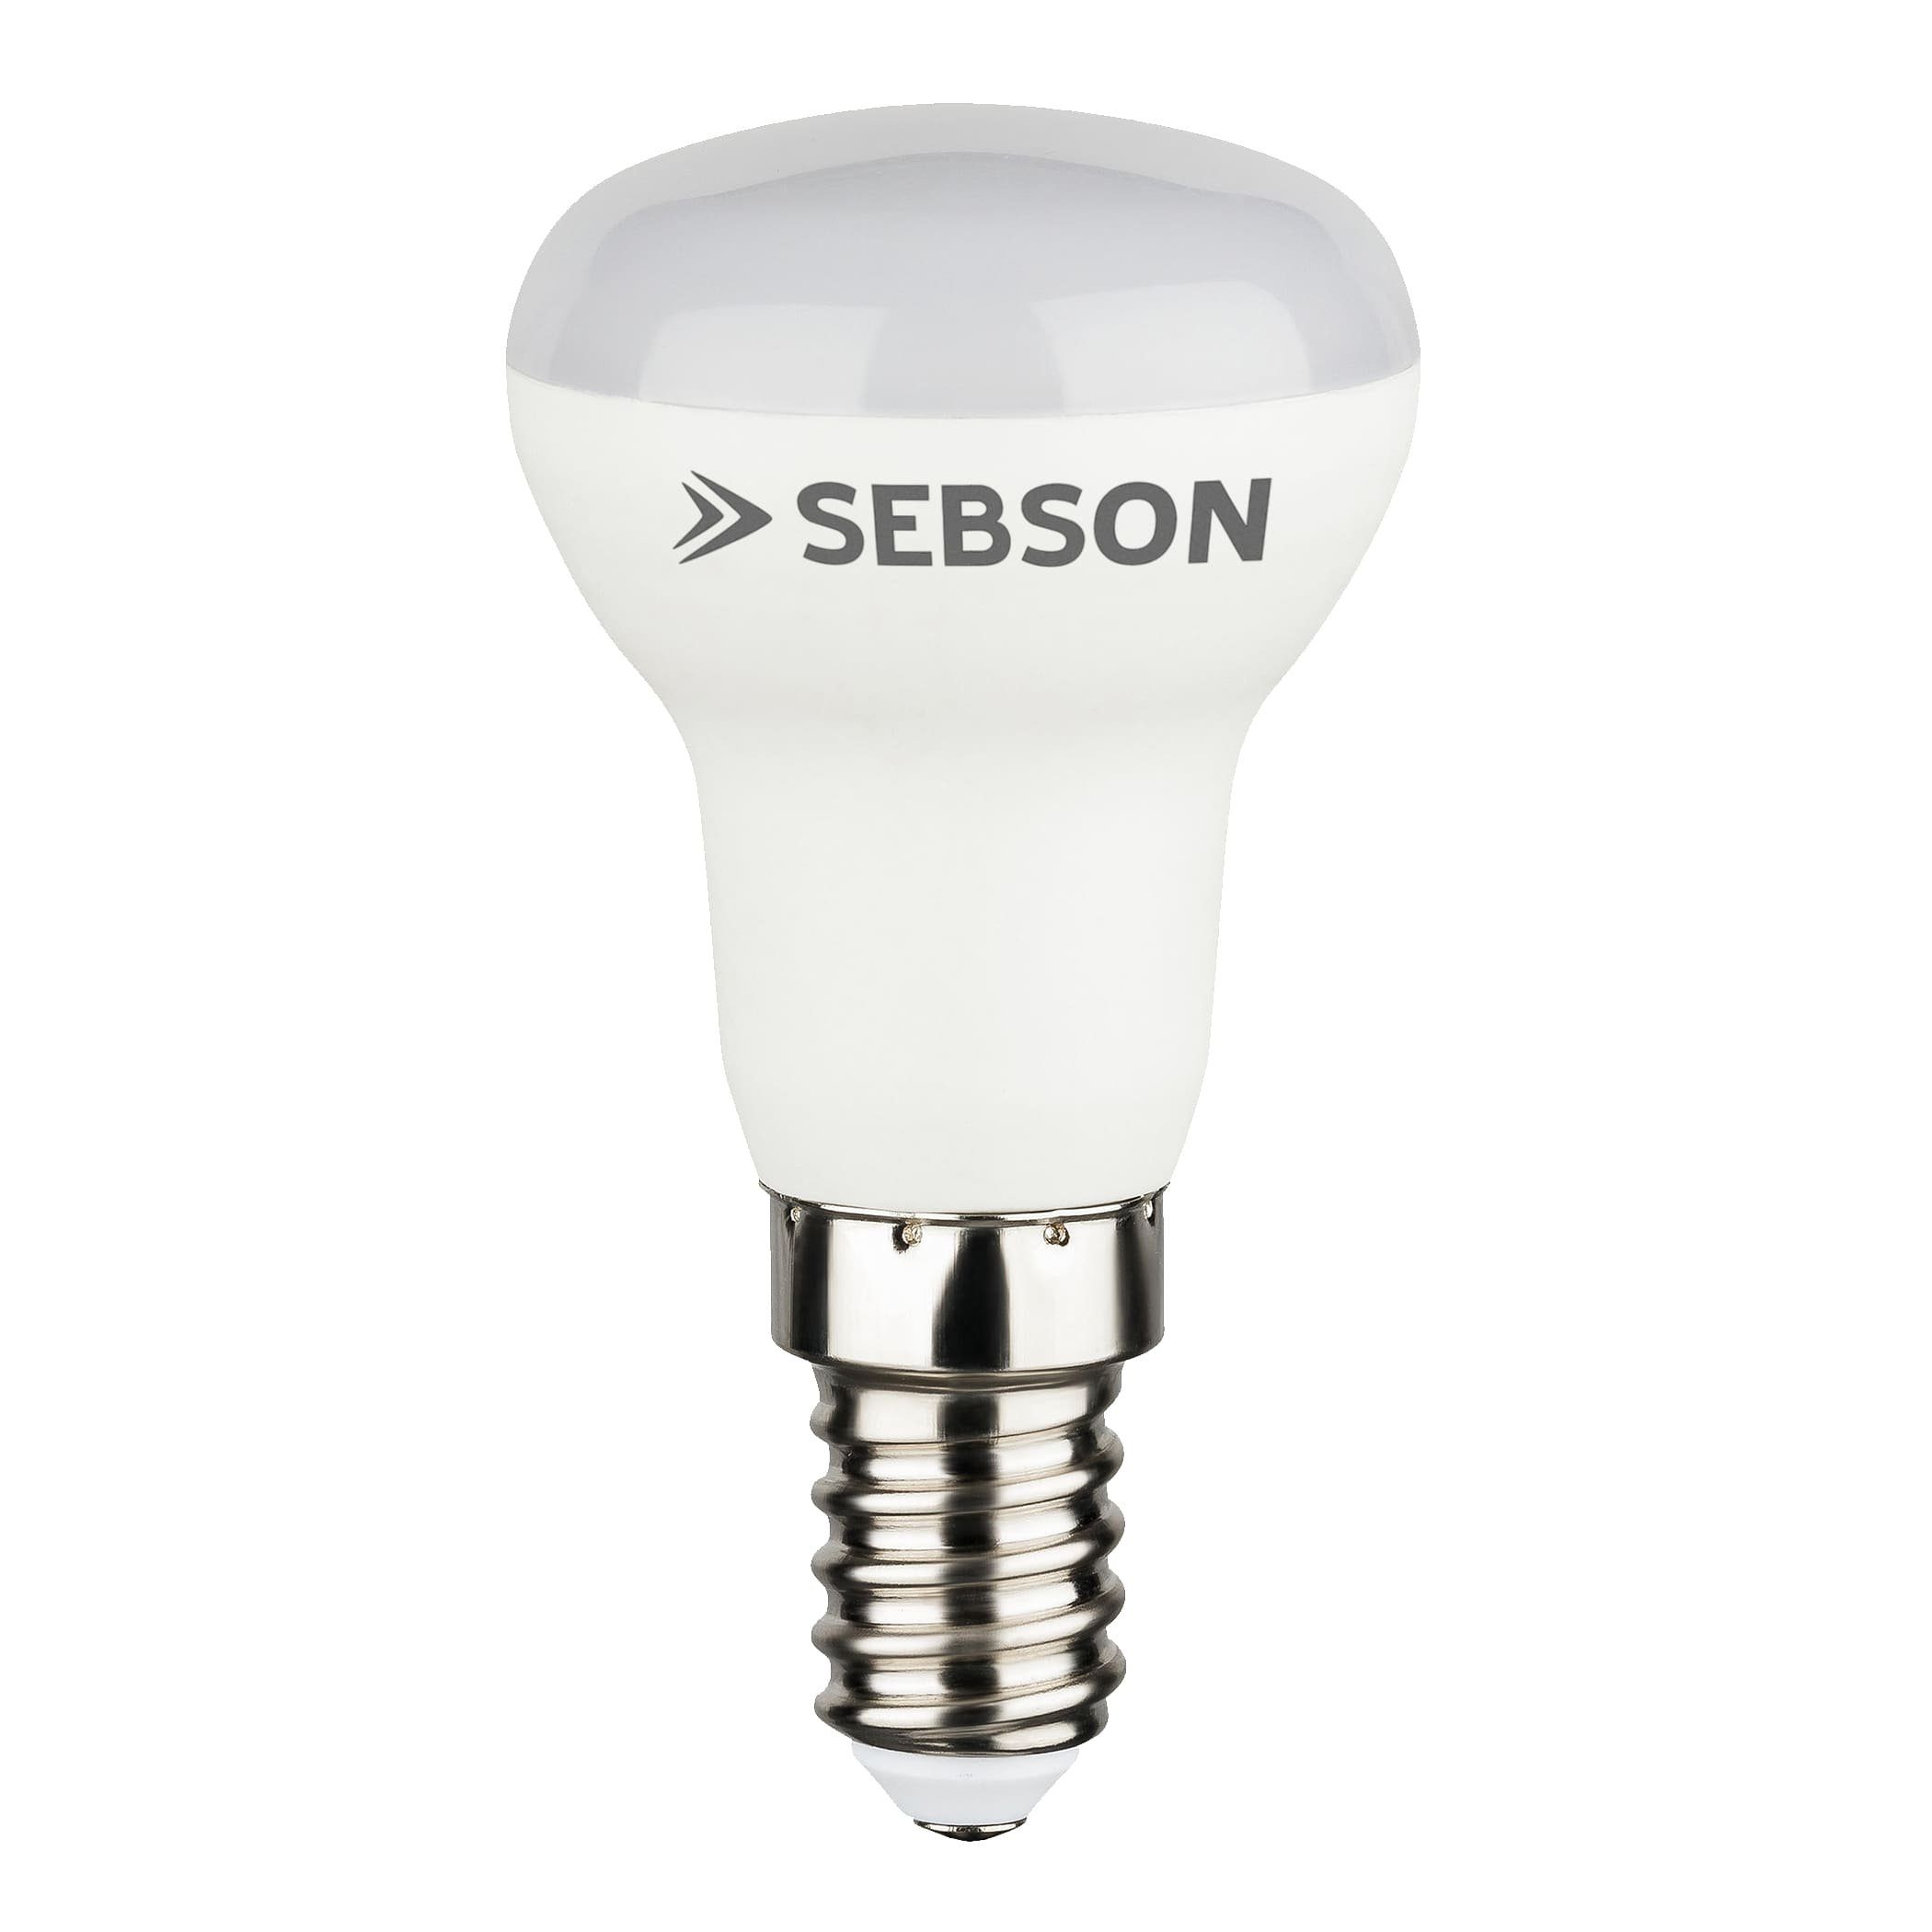 SEBSON »LED Lampe E14 R39 Reflektor 3W warmweiß 3000K 200lm, Ra97, 230V LED  Leuchtmittel flimmerfrei, E14 R39 Reflektorlampe« LED-Leuchtmittel